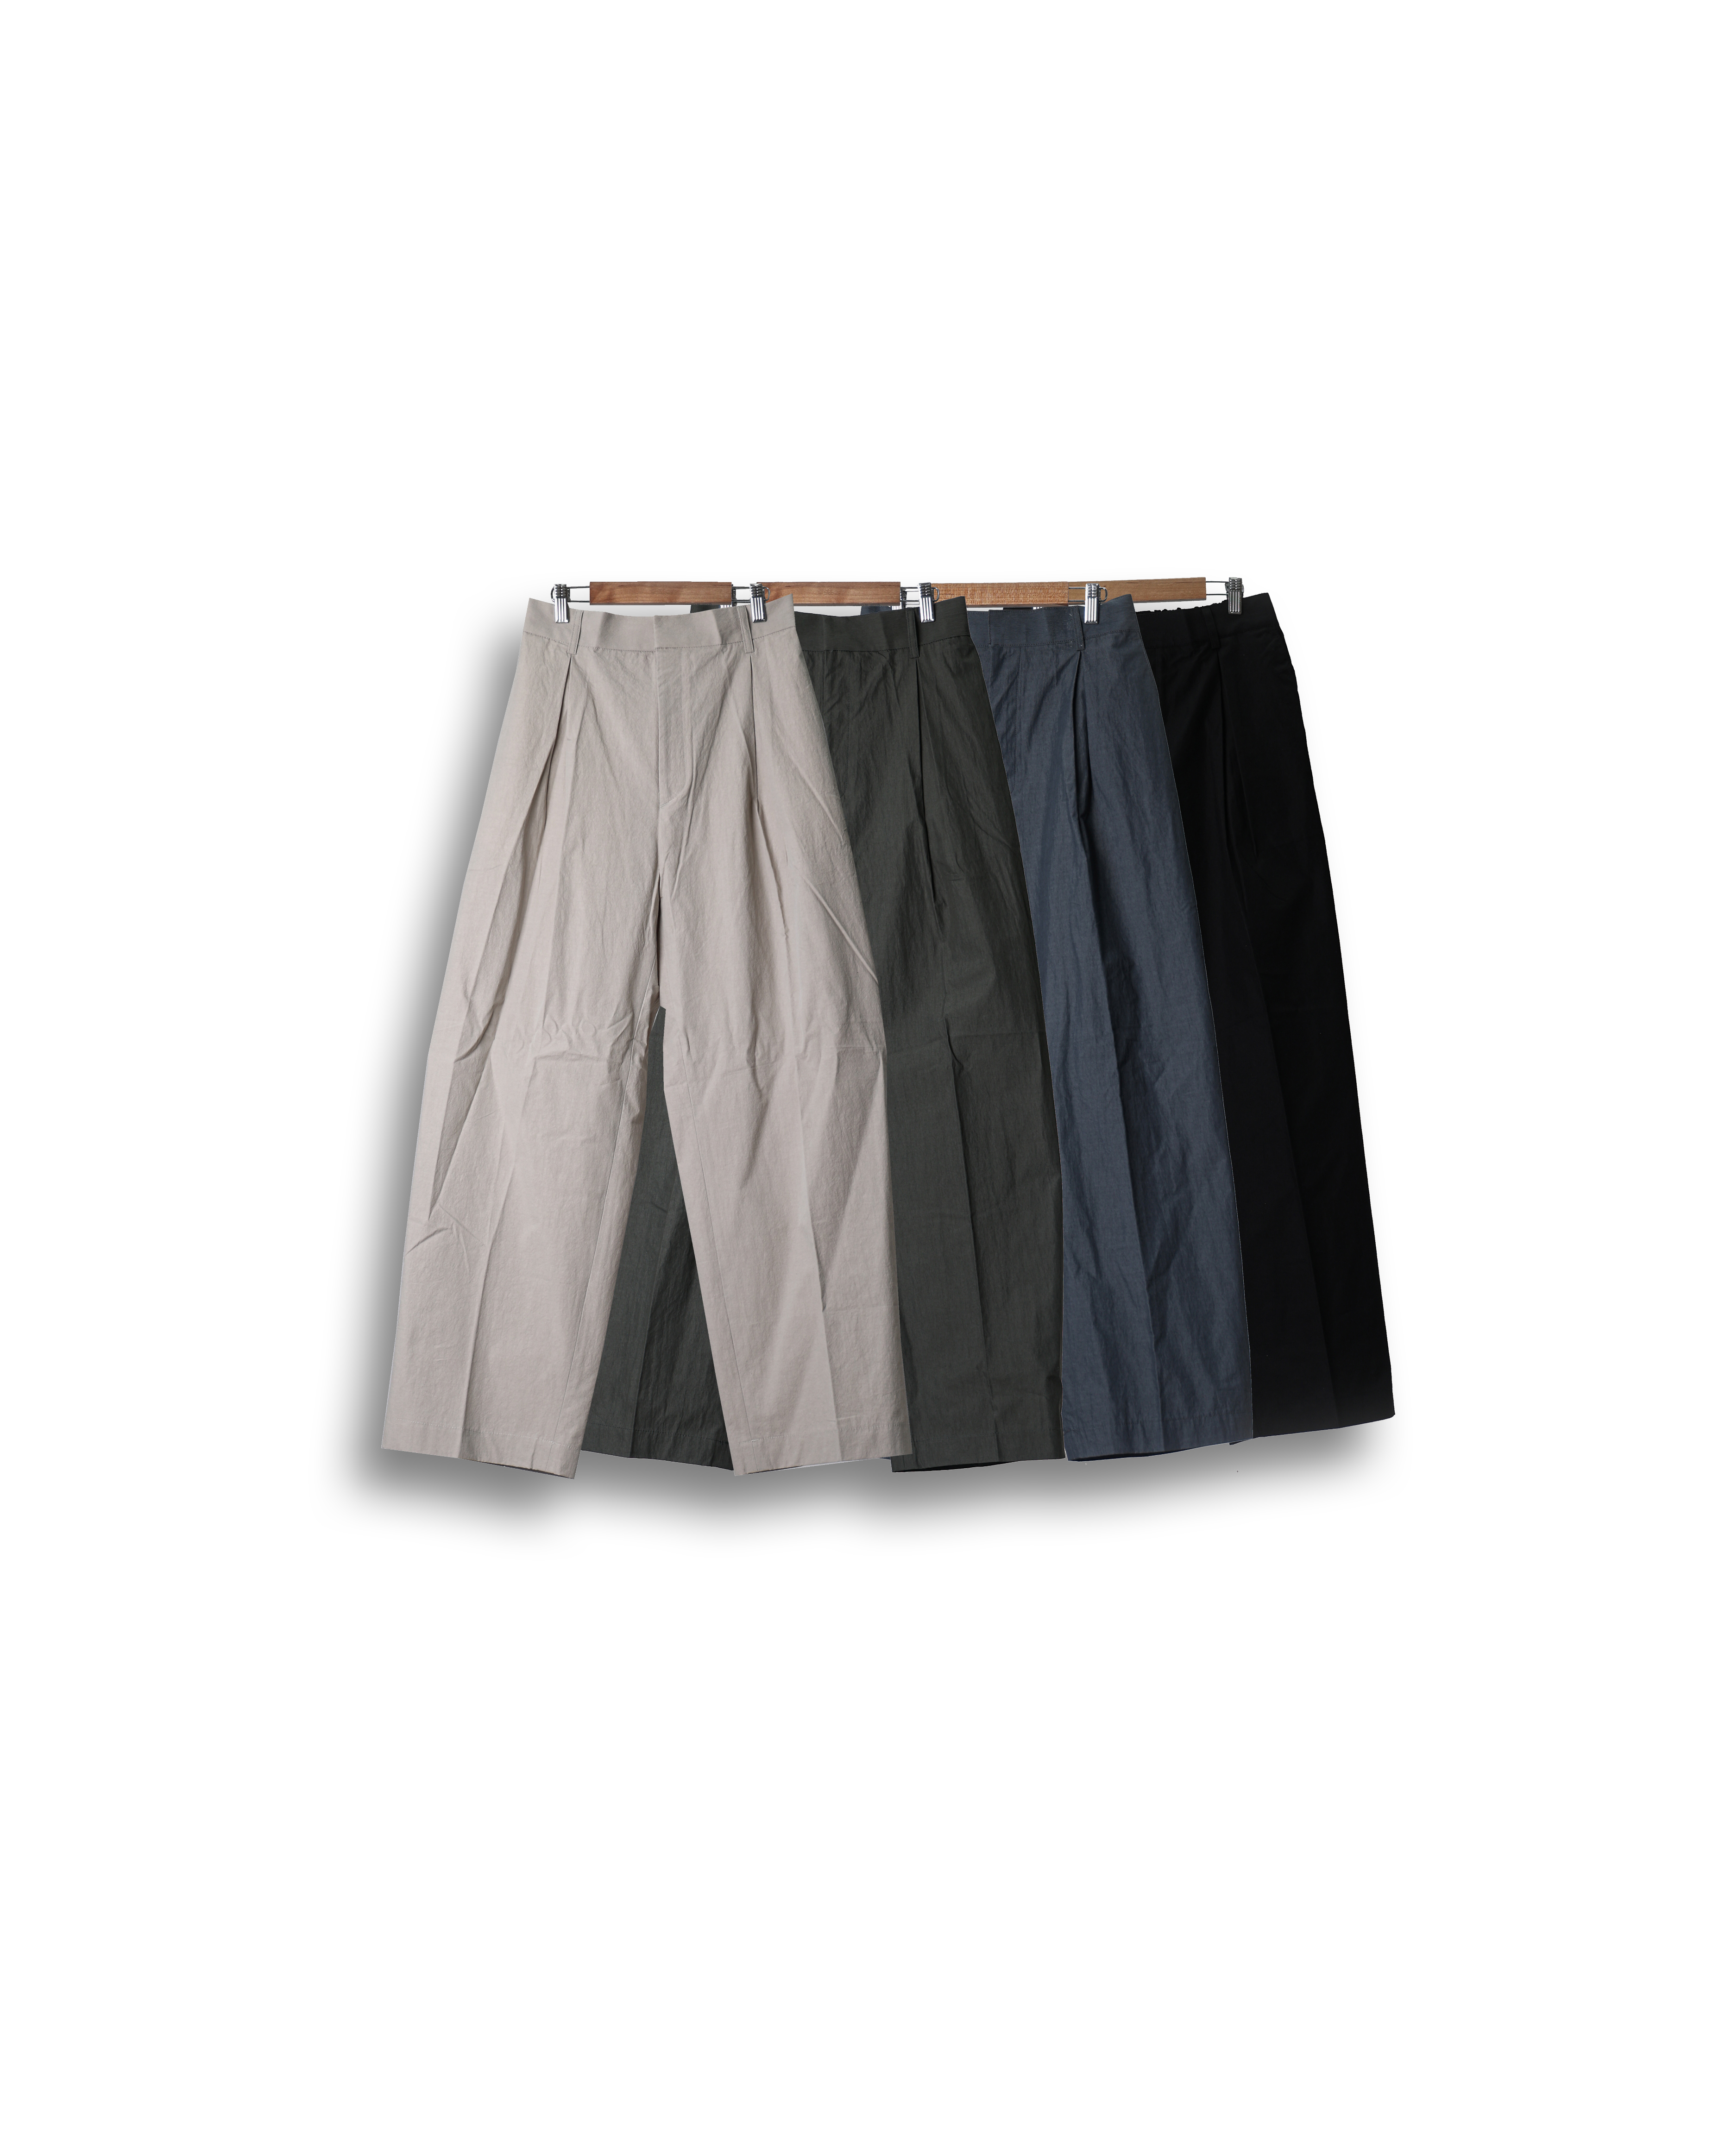 FREAK CN Banded Wide Tuck Slacks (Black/Charcoal/Khaki/Beige)